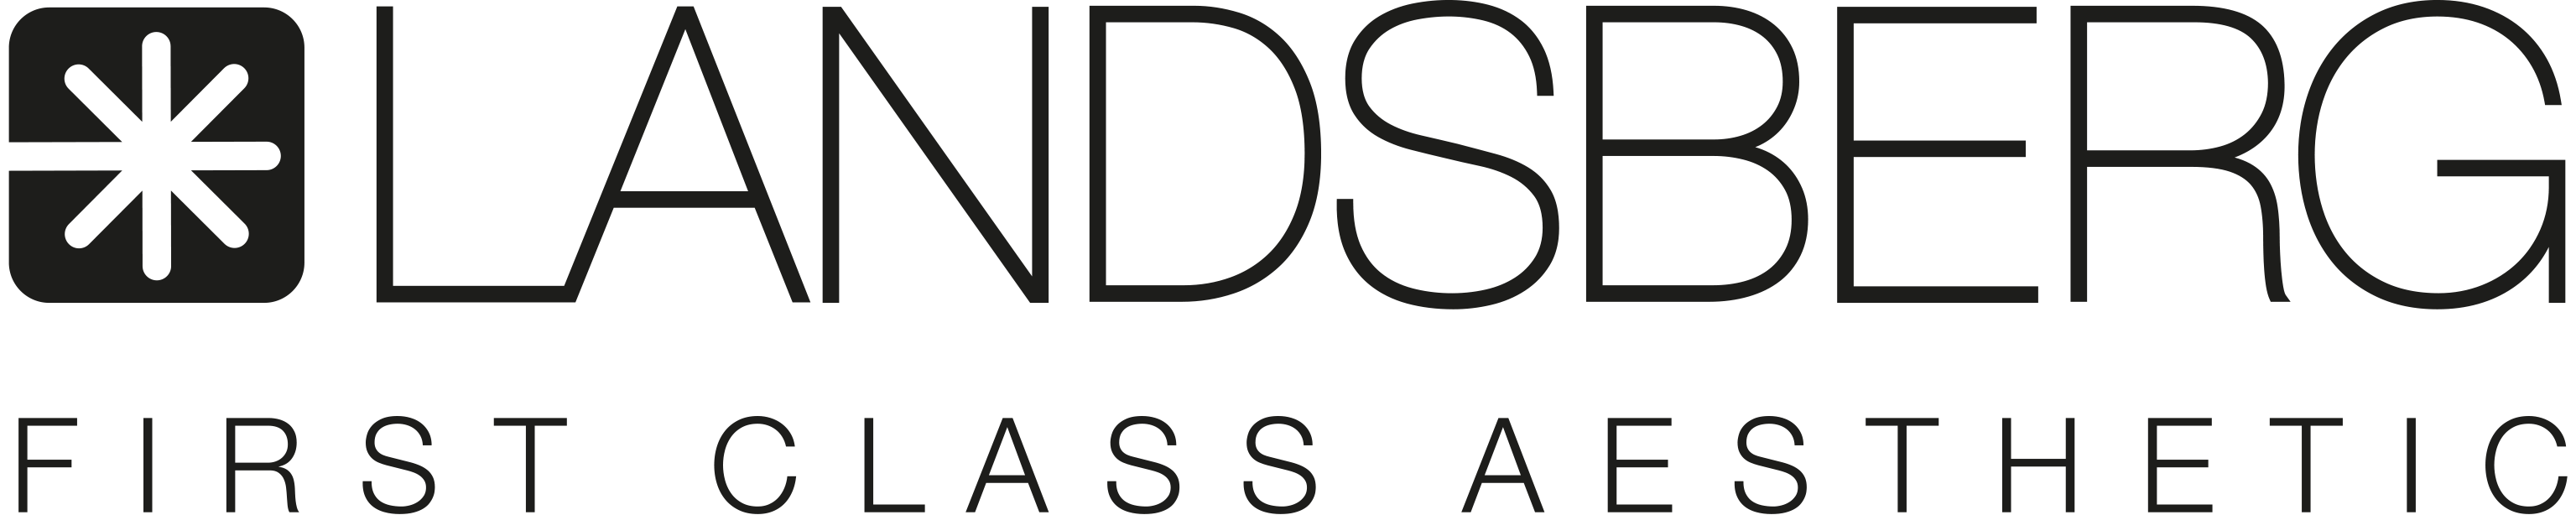 Landsberg-First-Class-Aesthetic-logo